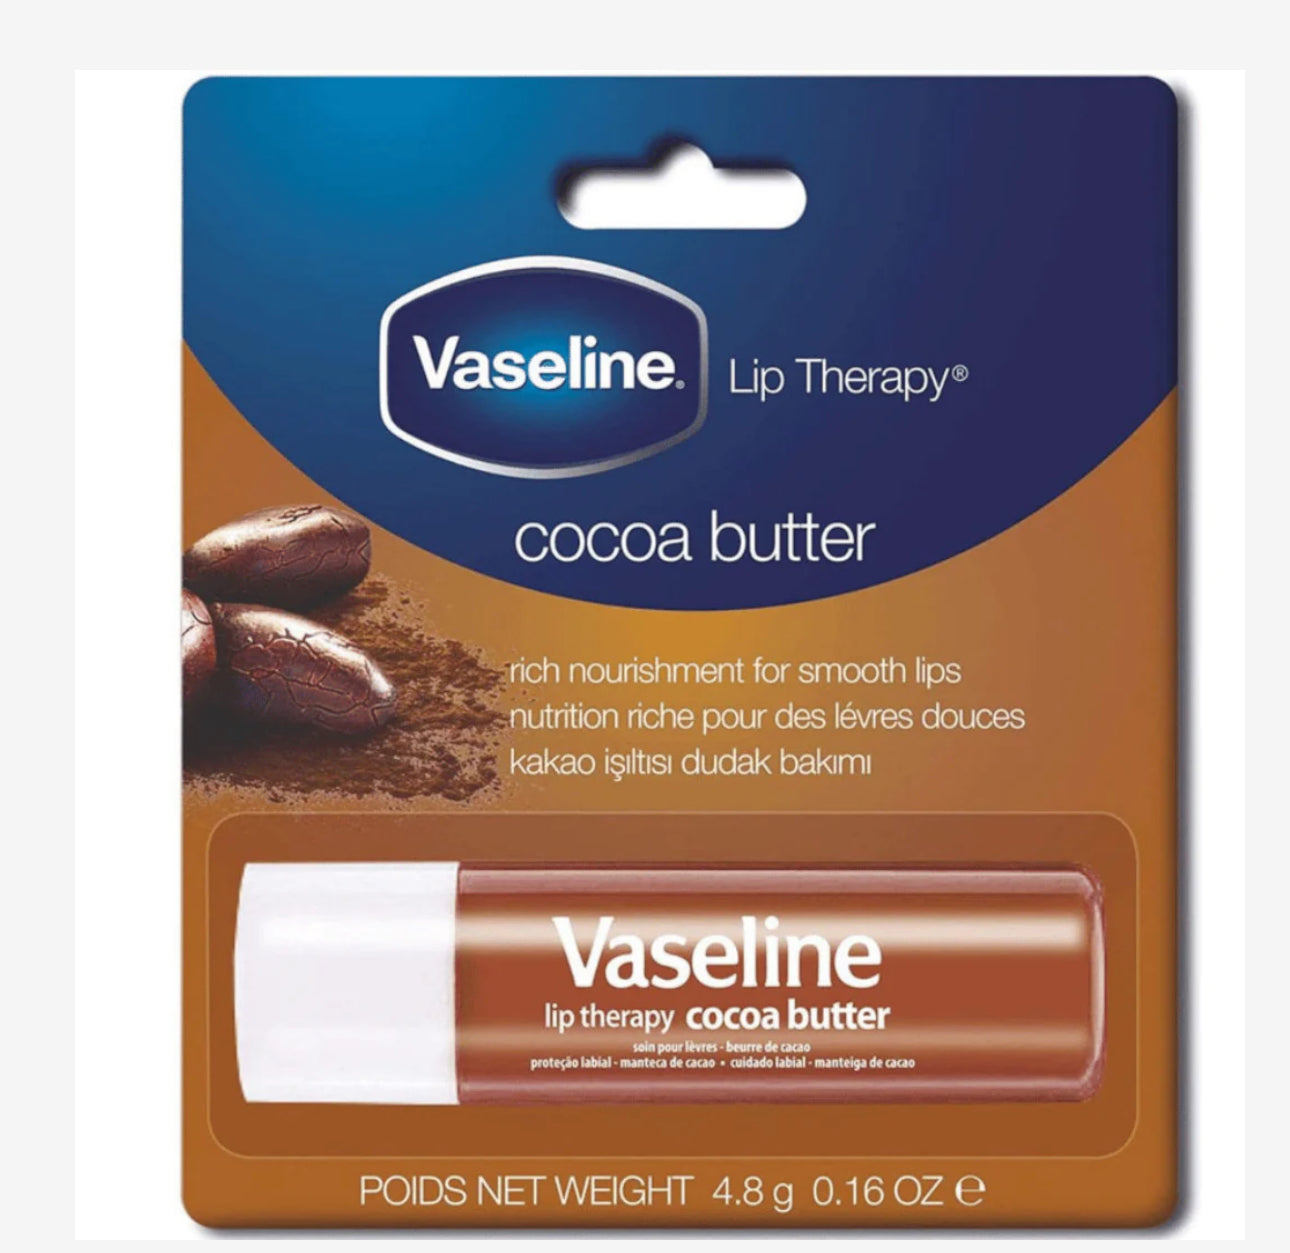 Vaseline Cocoa butter